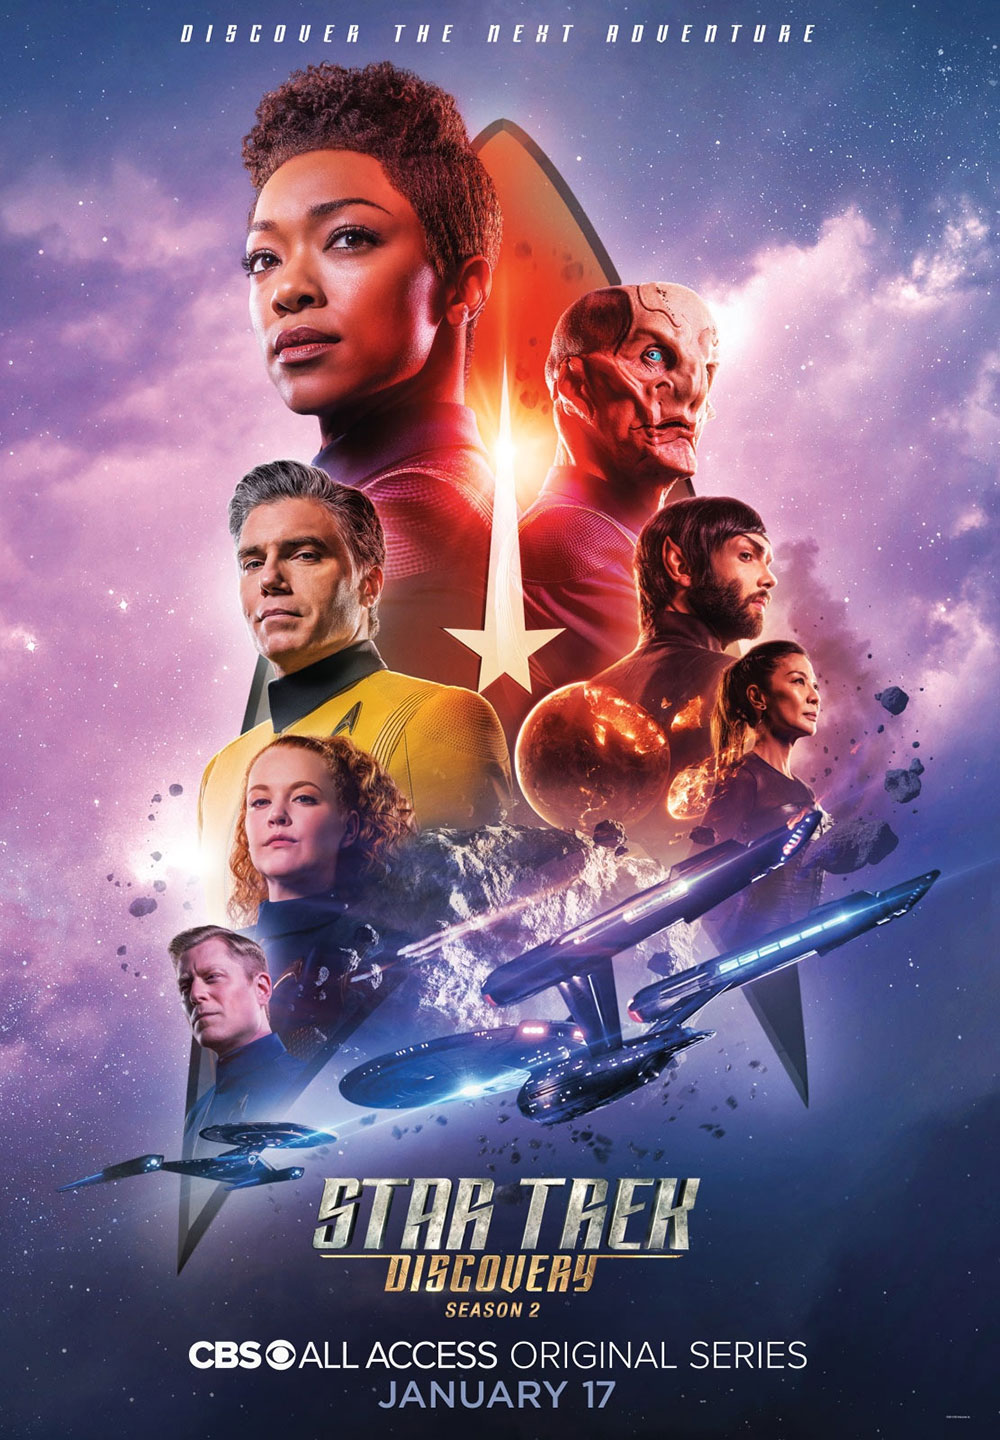 Star trek: Discovery – Season 2 Poster